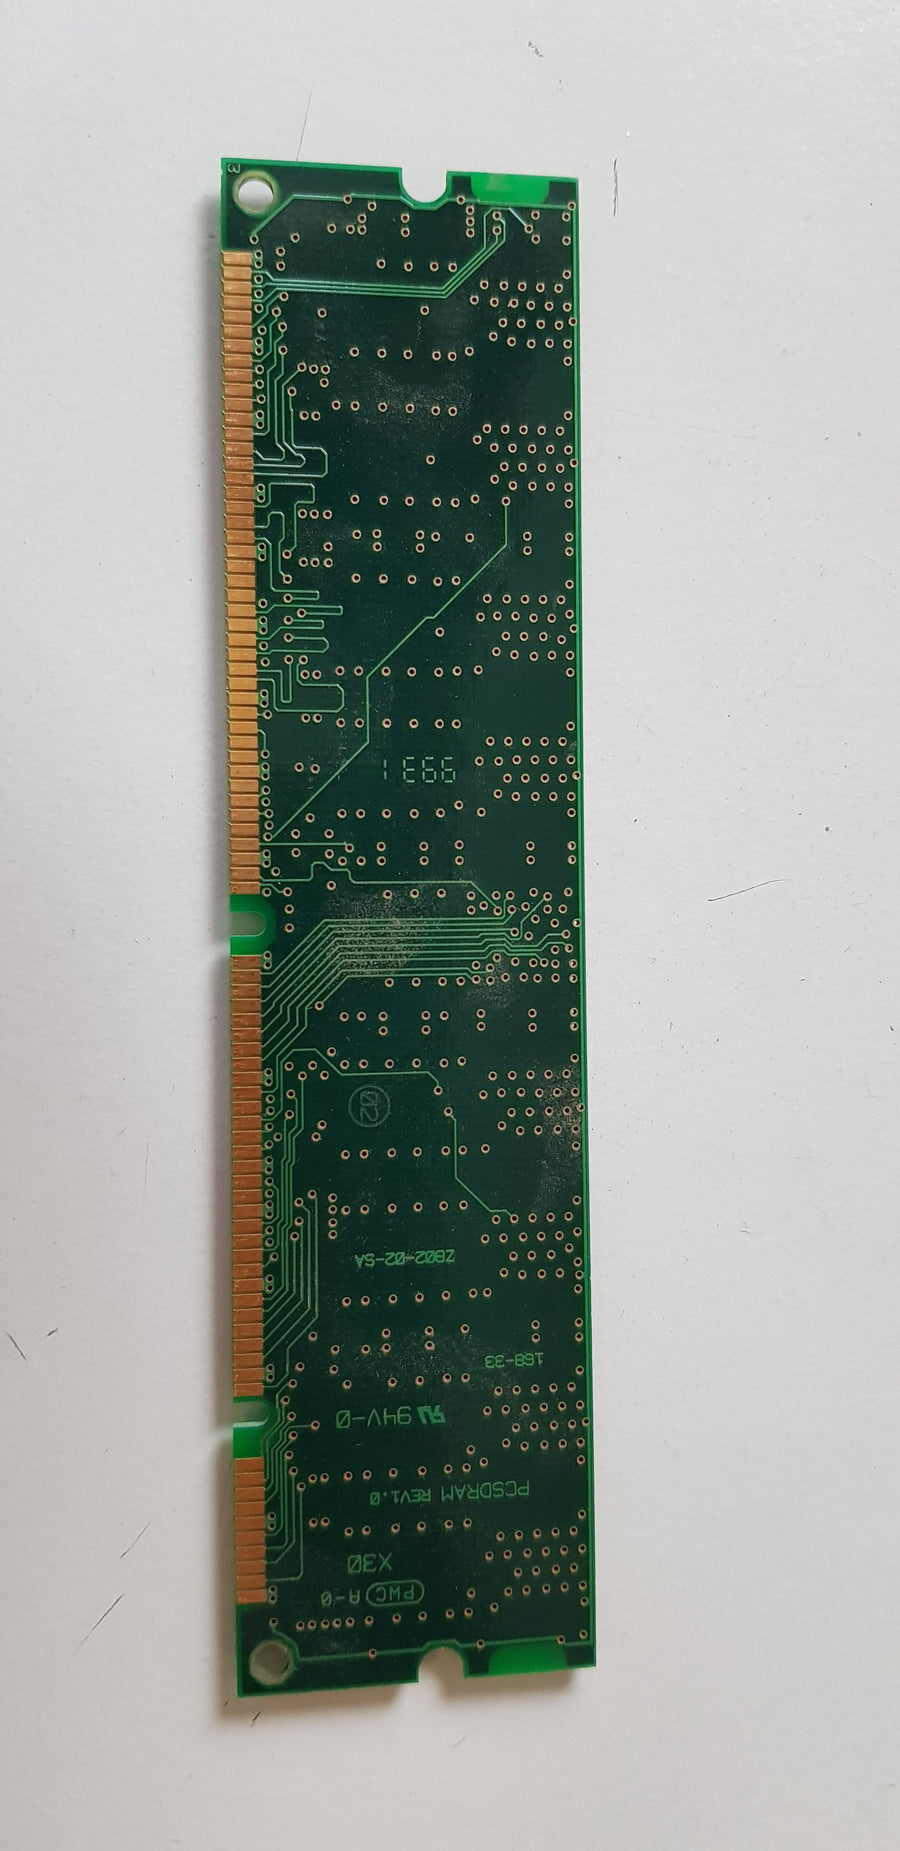 Infineon 64MB PC100 100MHz CL2 168 Pin DIMM Memory Module ( HYS64V8300GU-8-B)